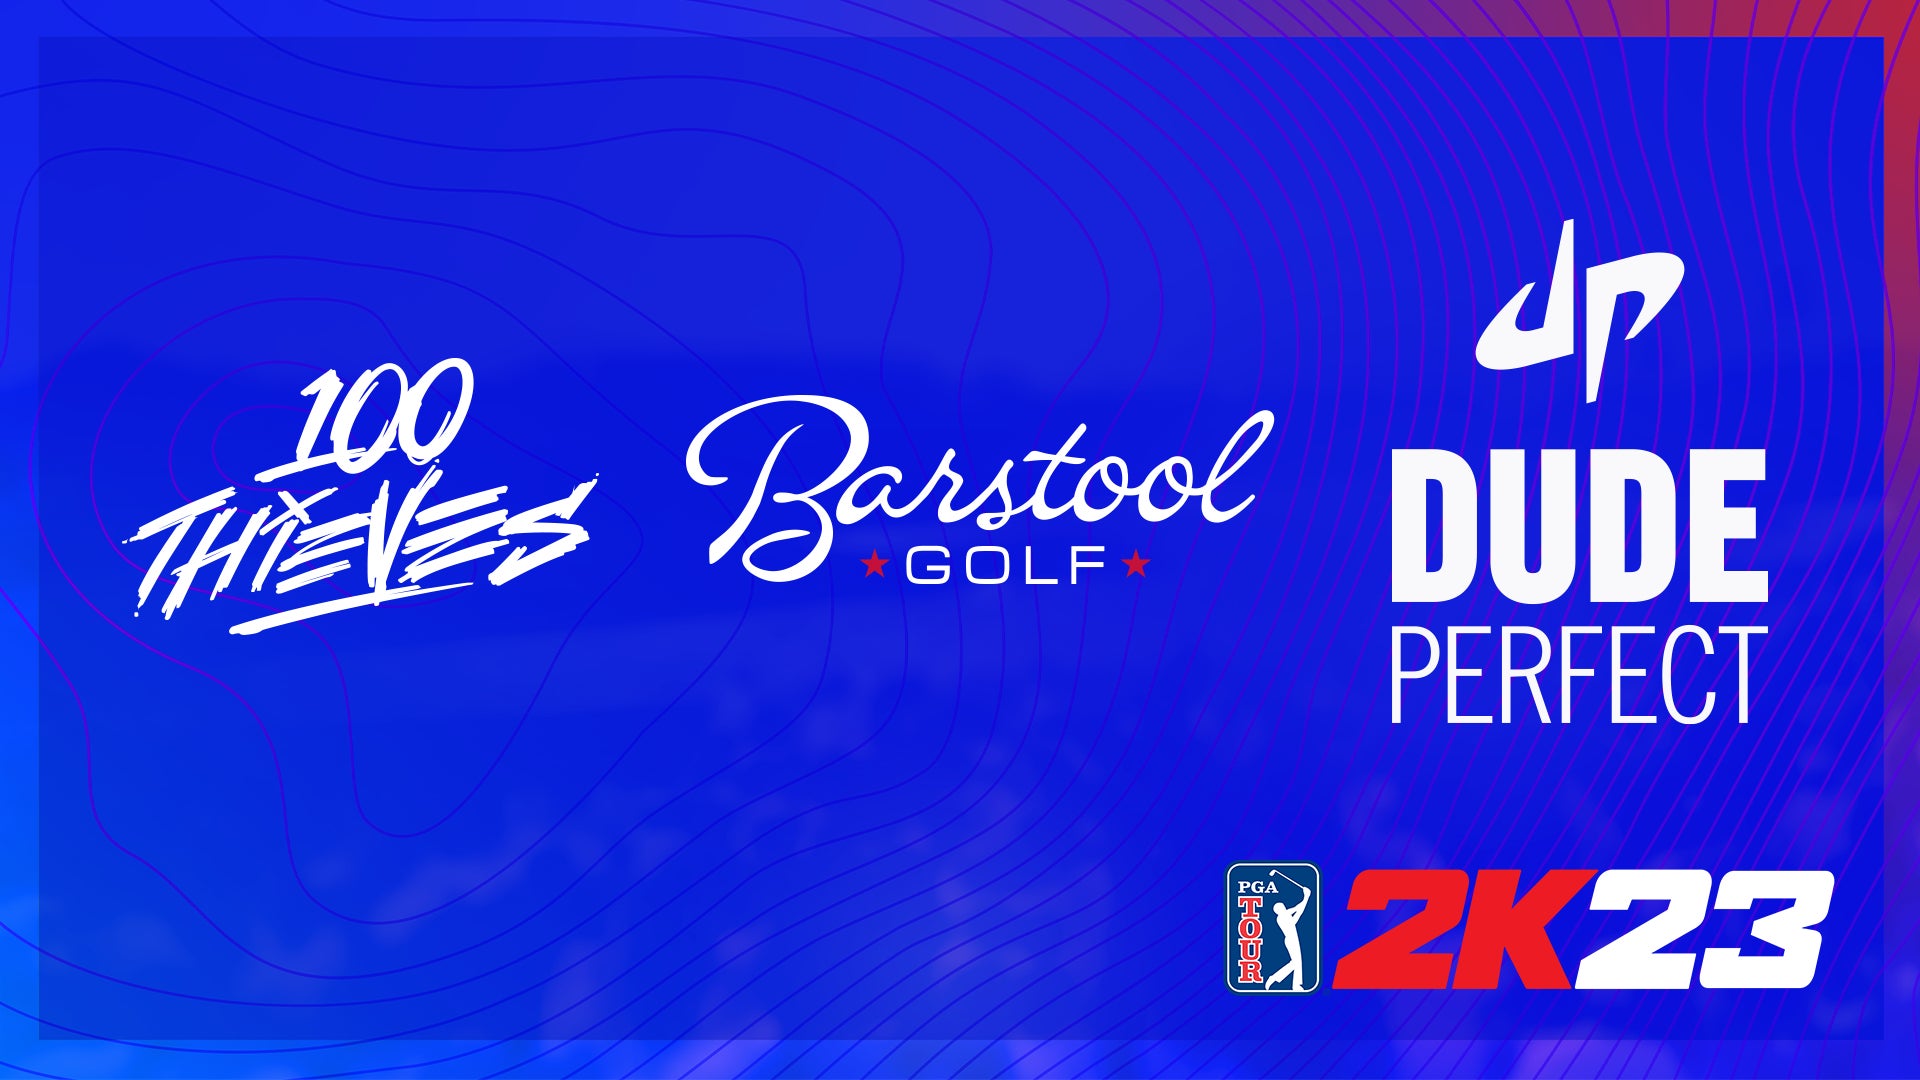 Barstool Sports、Dude Perfect、100 Thievesと『ゴルフ PGAツアー® 2K23』がコラボし新たなスタイルを提供